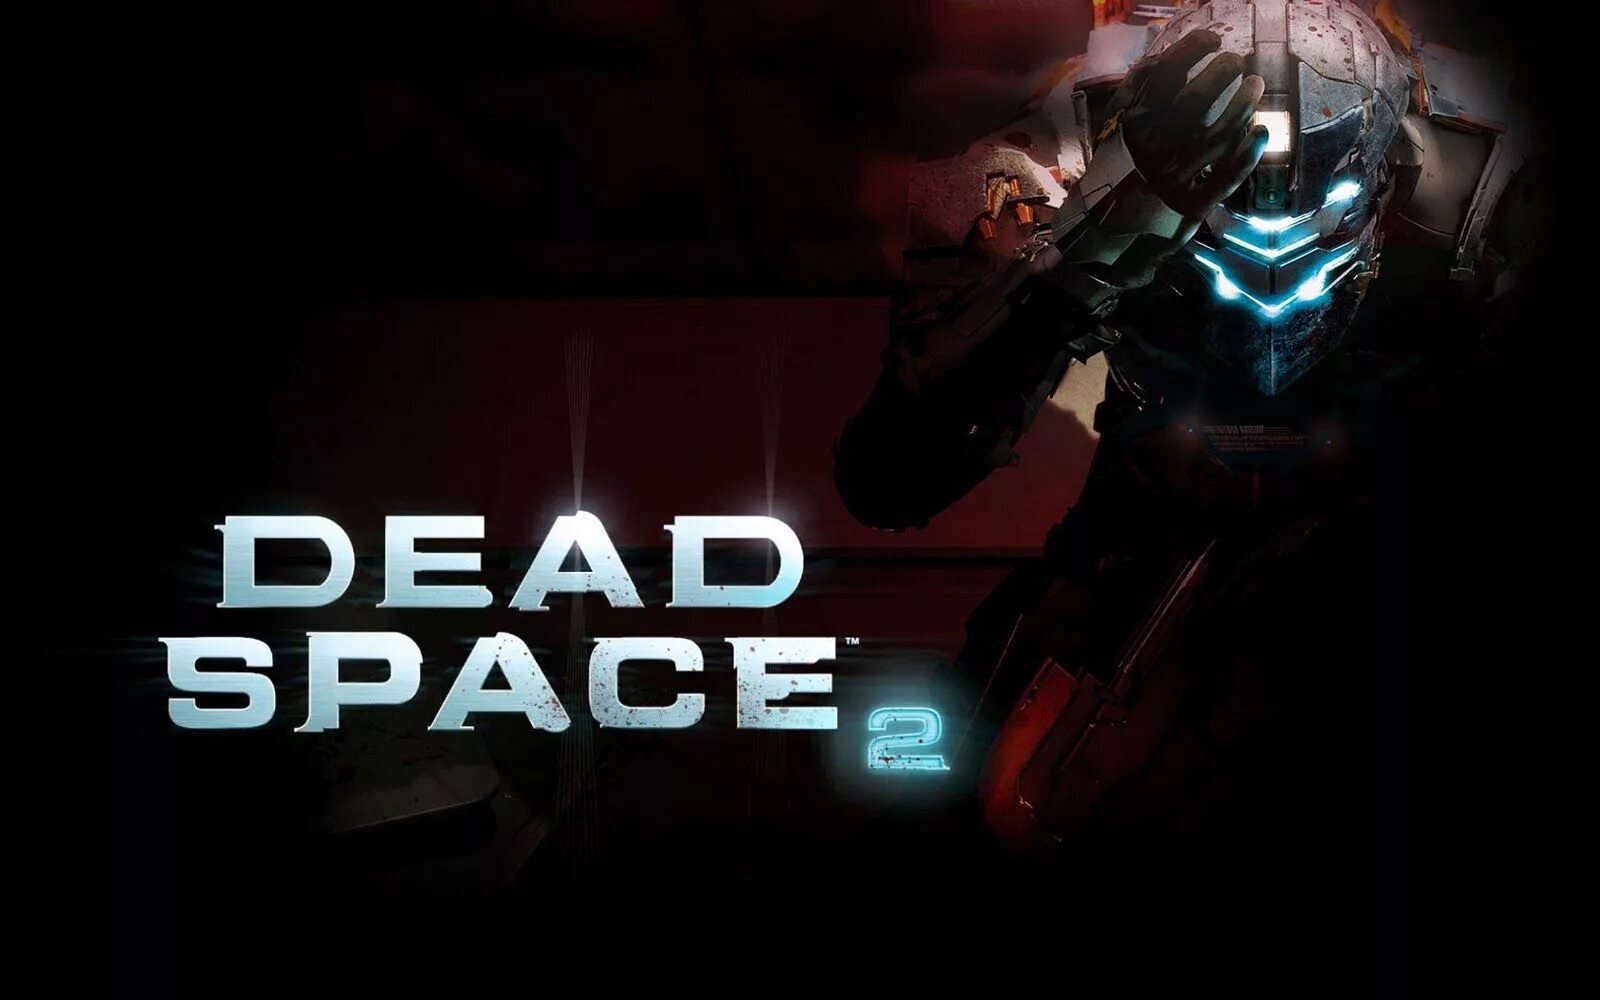 New space 2. Дед Спейс 2 Постер. Дед Спейс 2 фото. Dead Space 2 обложка.